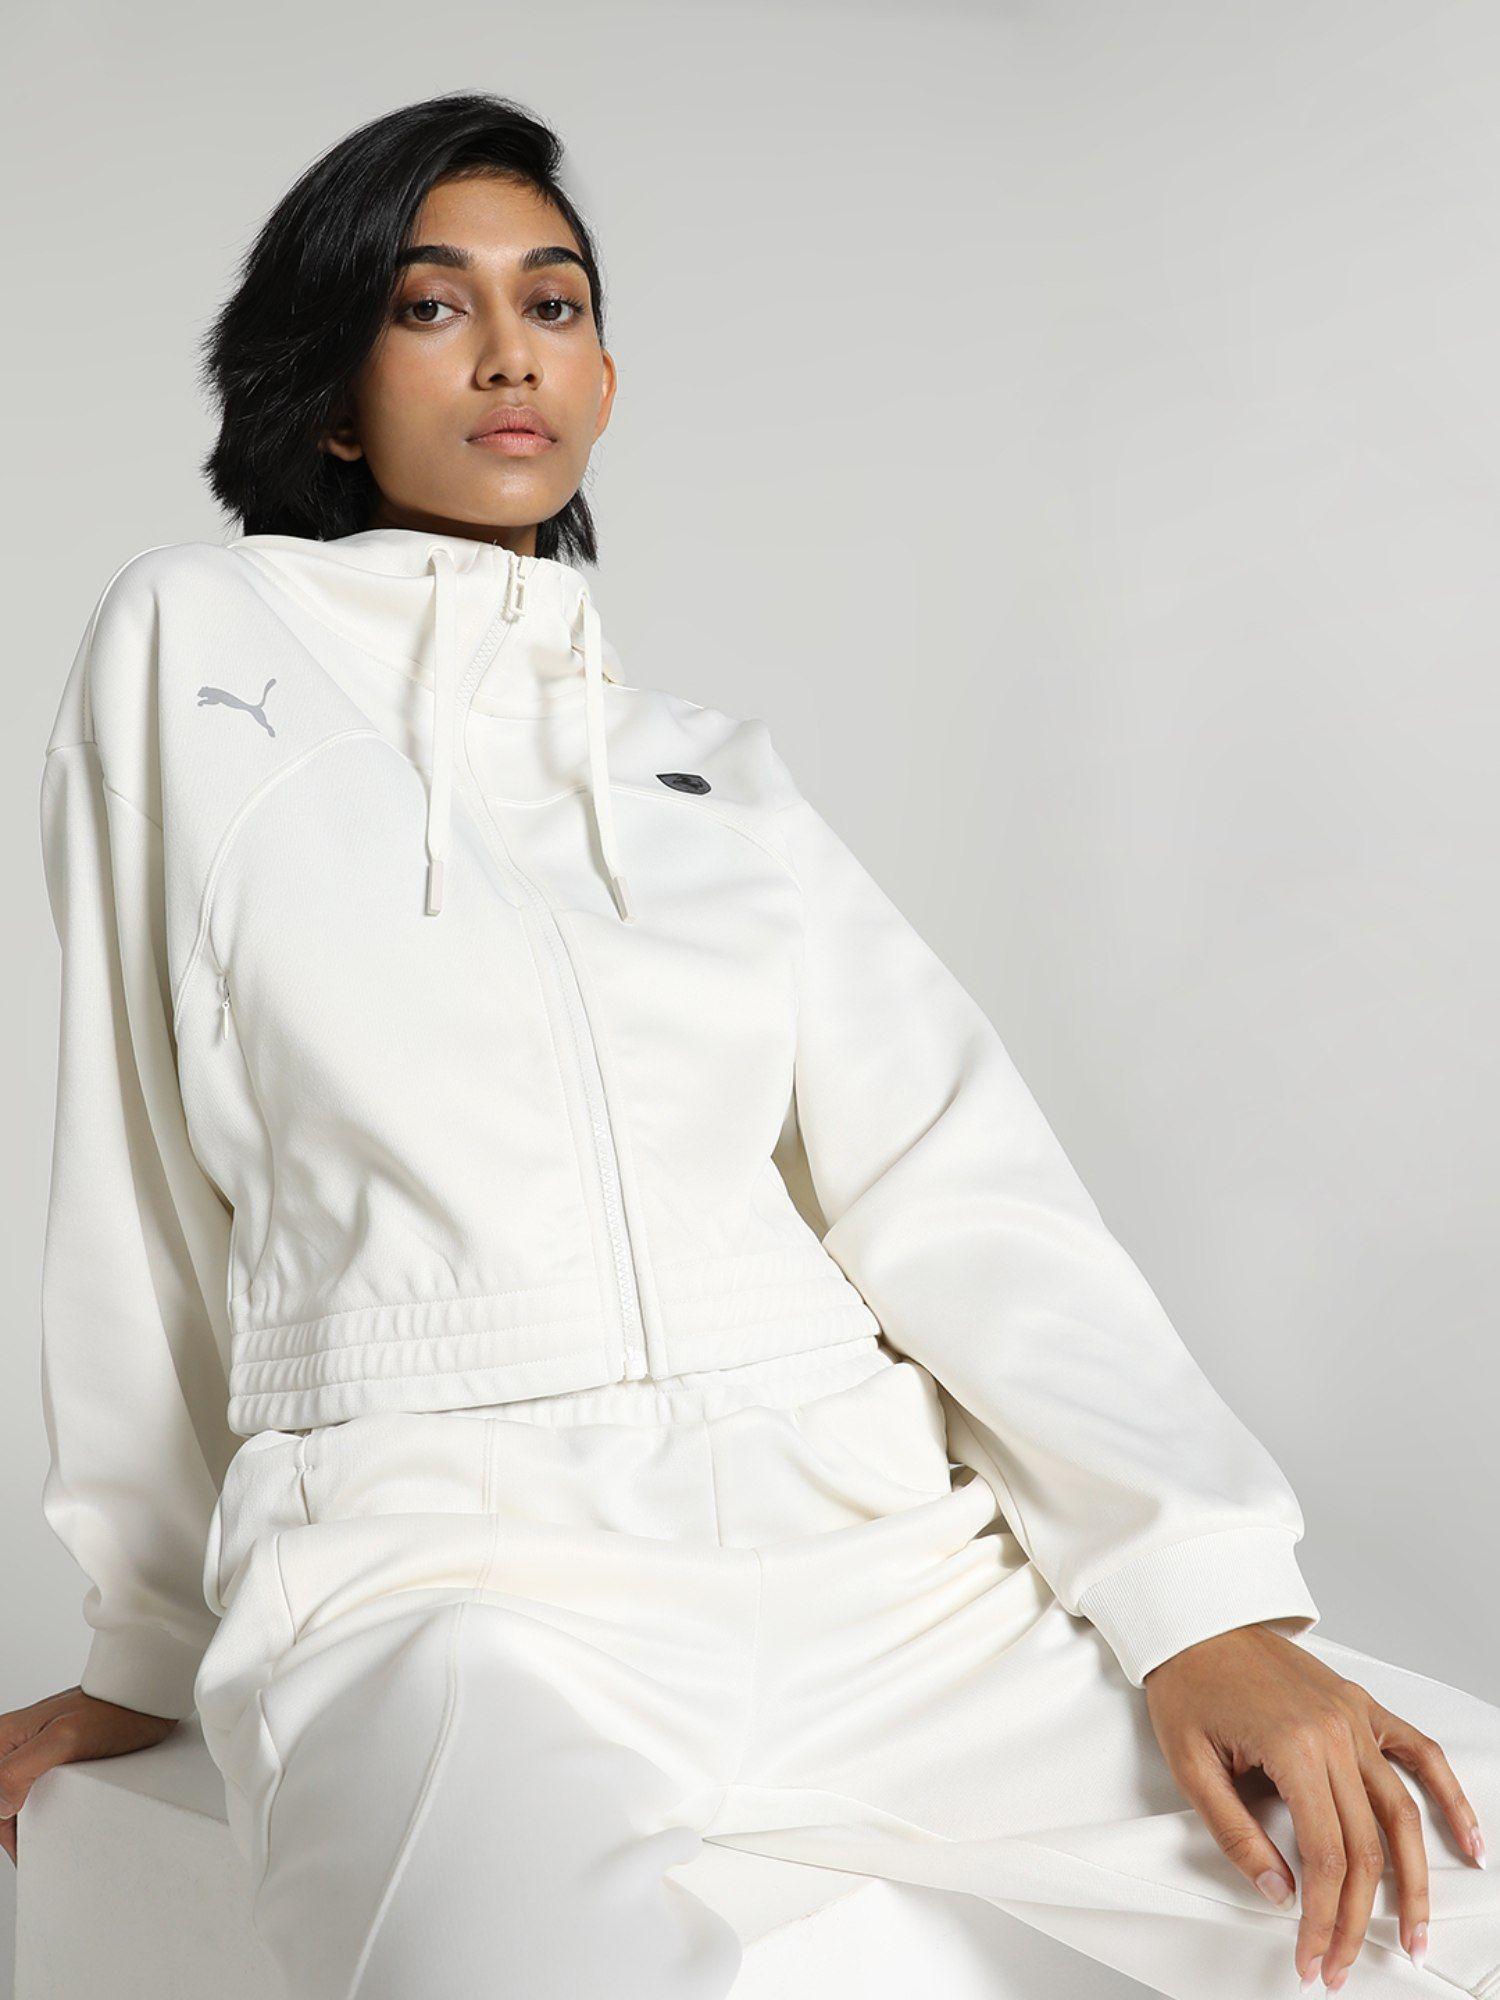 ferrari style hooded women white sweatshirt